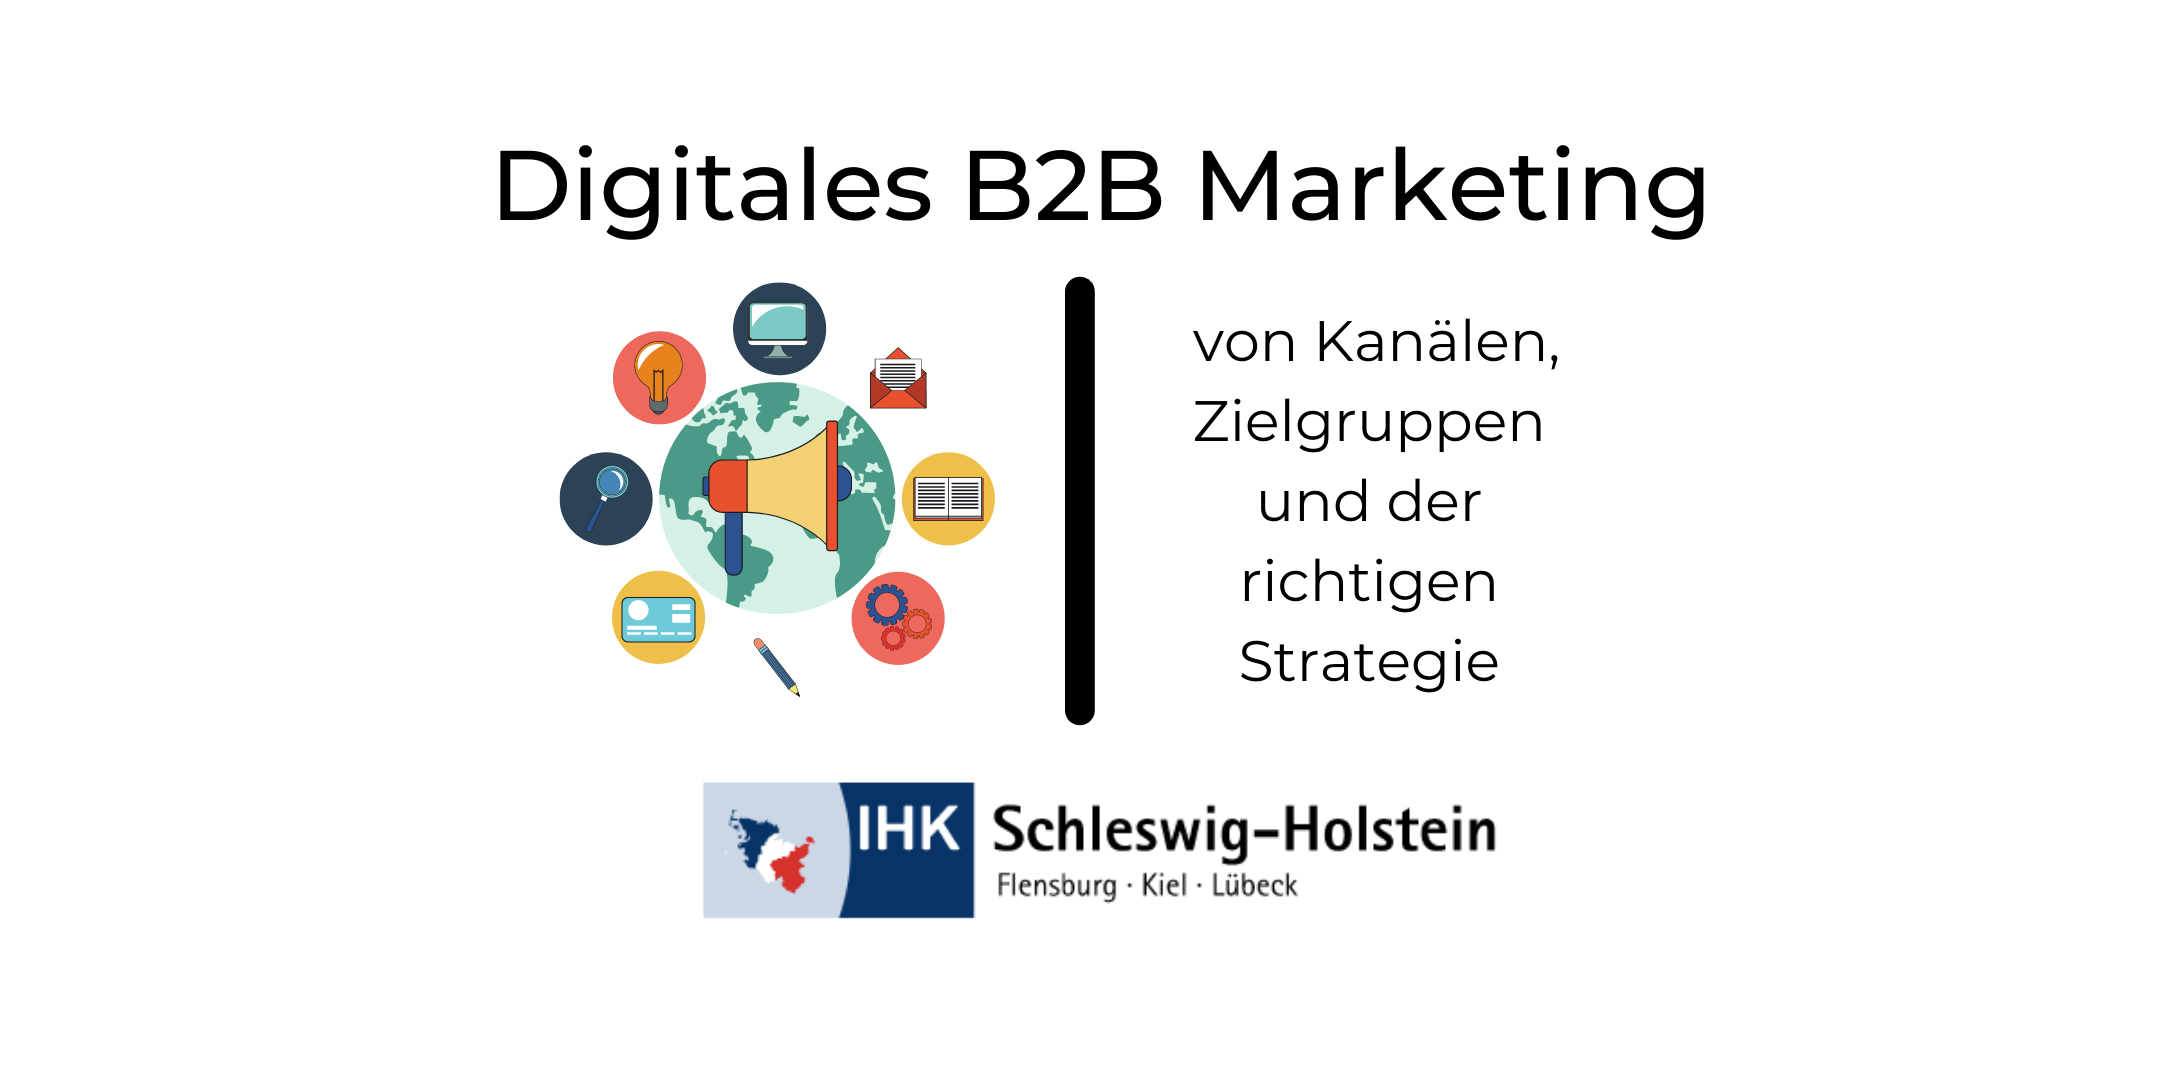 Digitales B2B Marketing